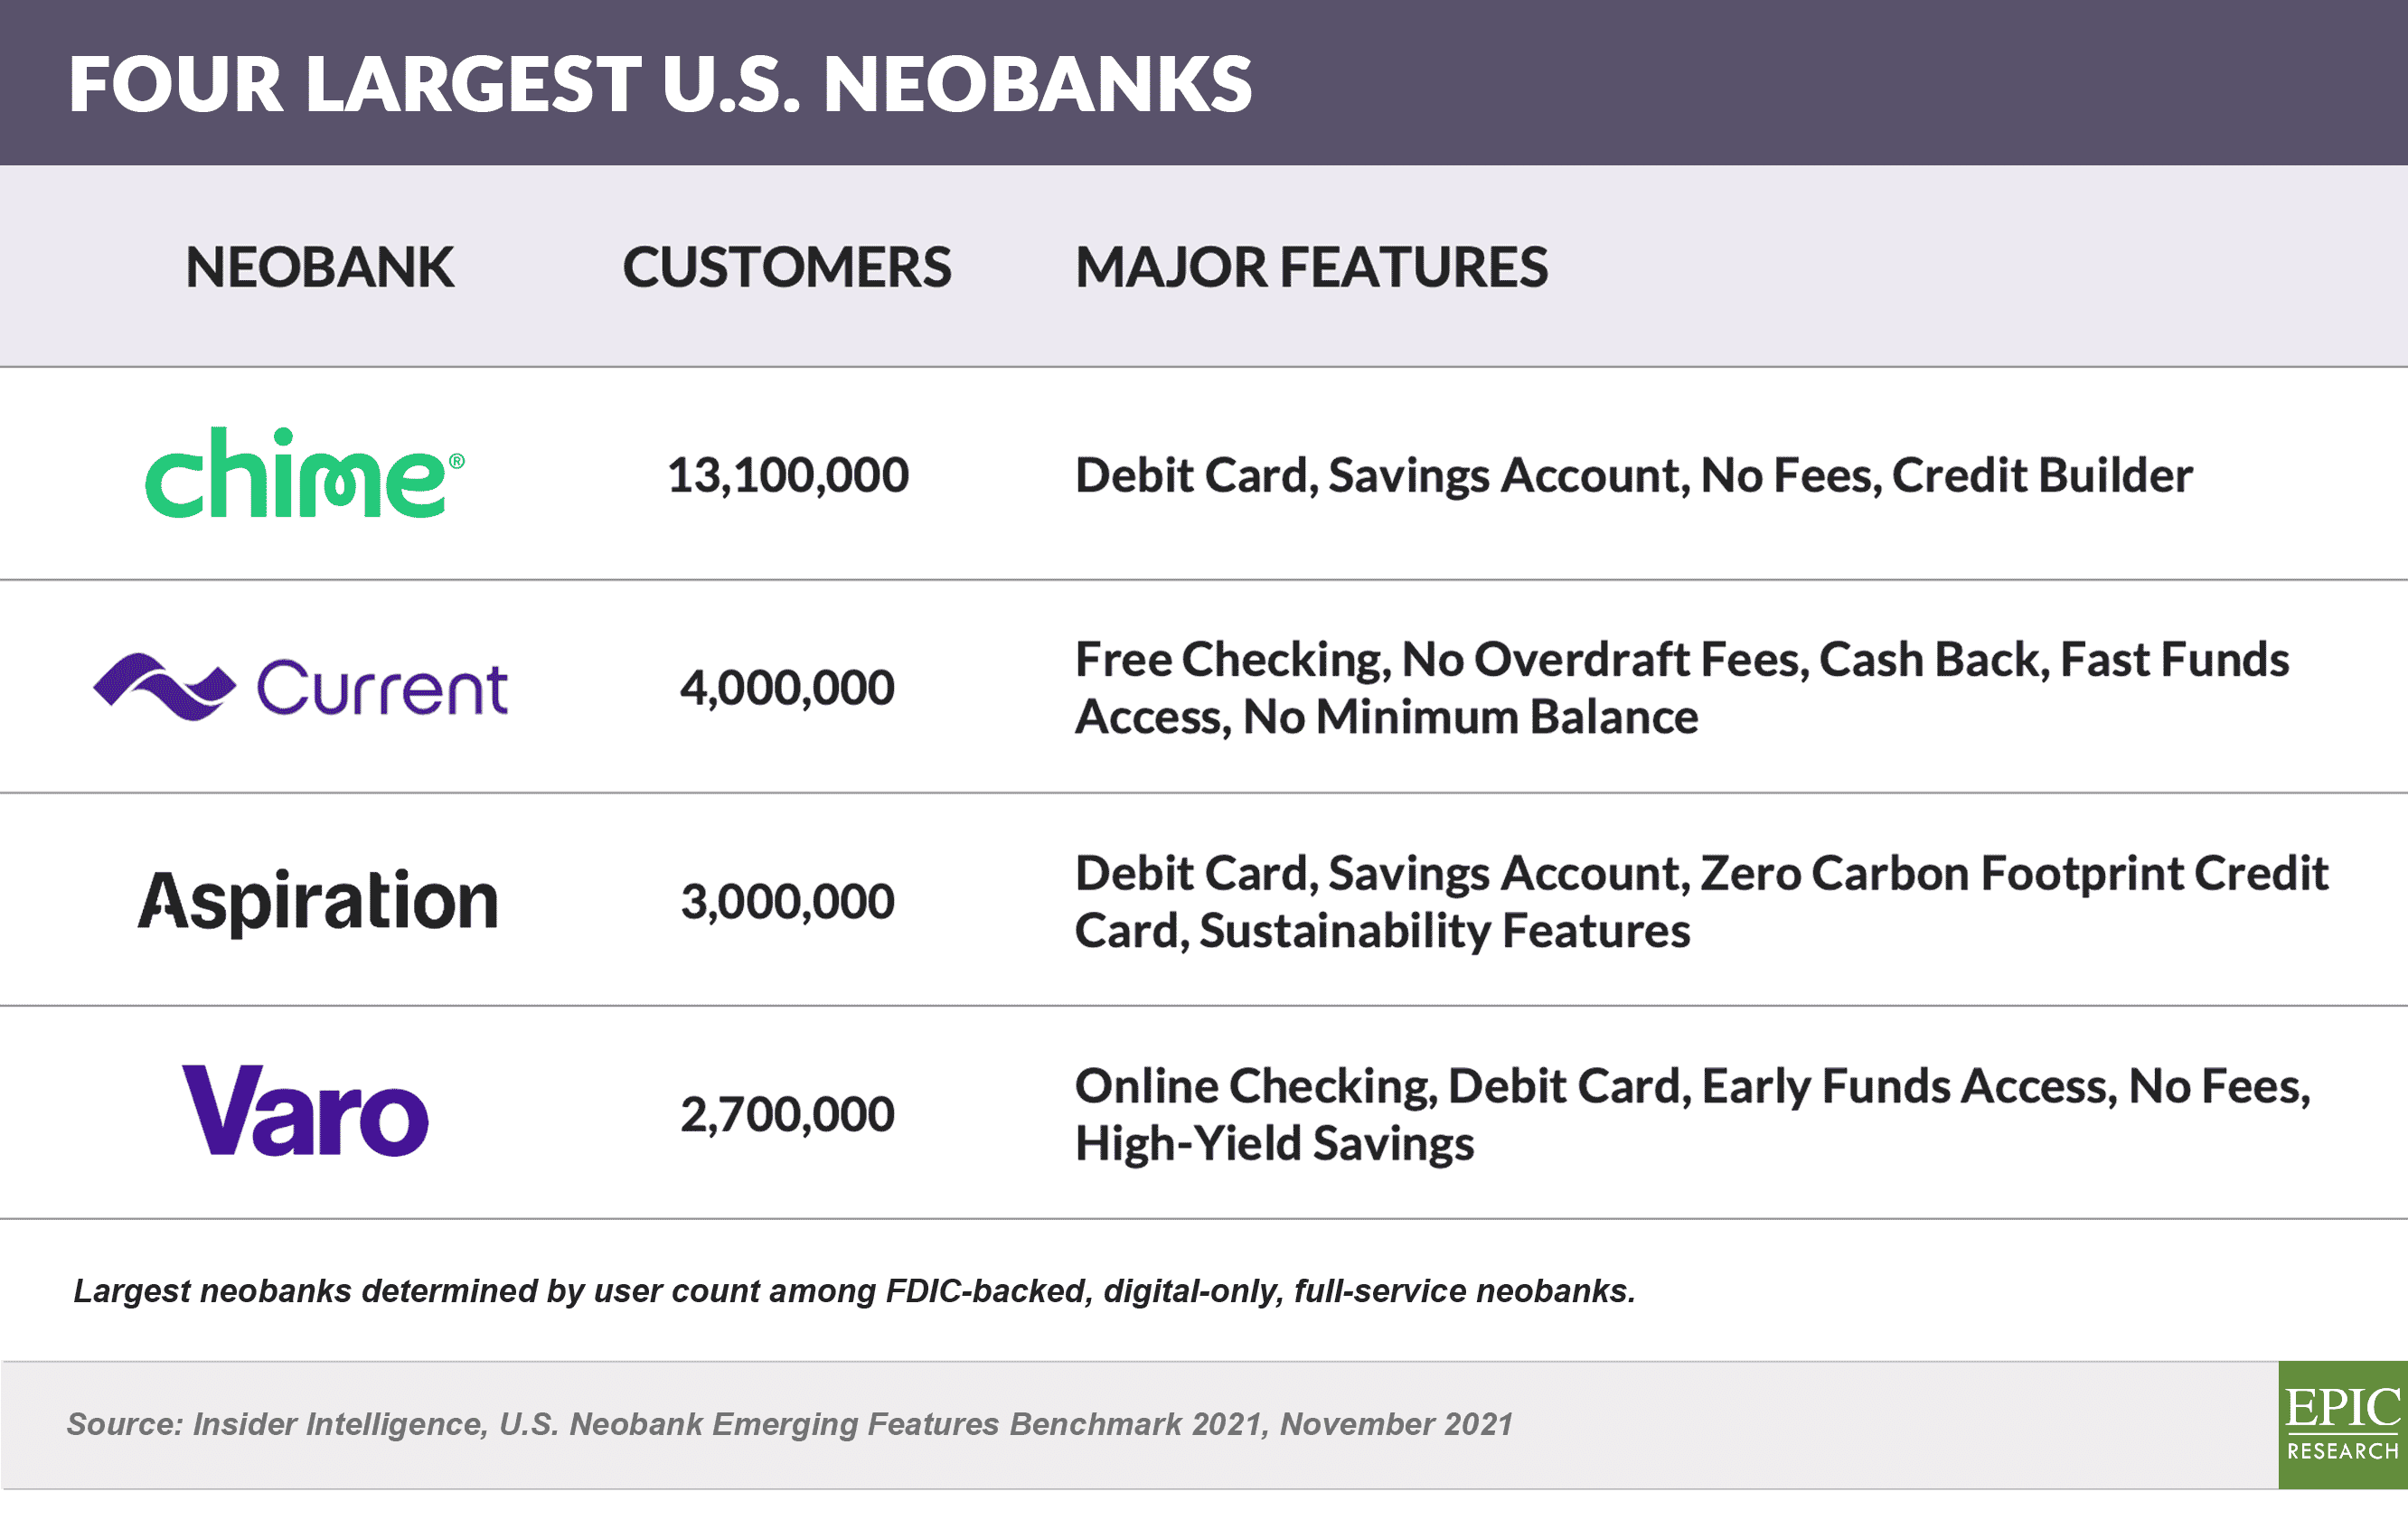 Top 4 Largest U.S. Neobanks